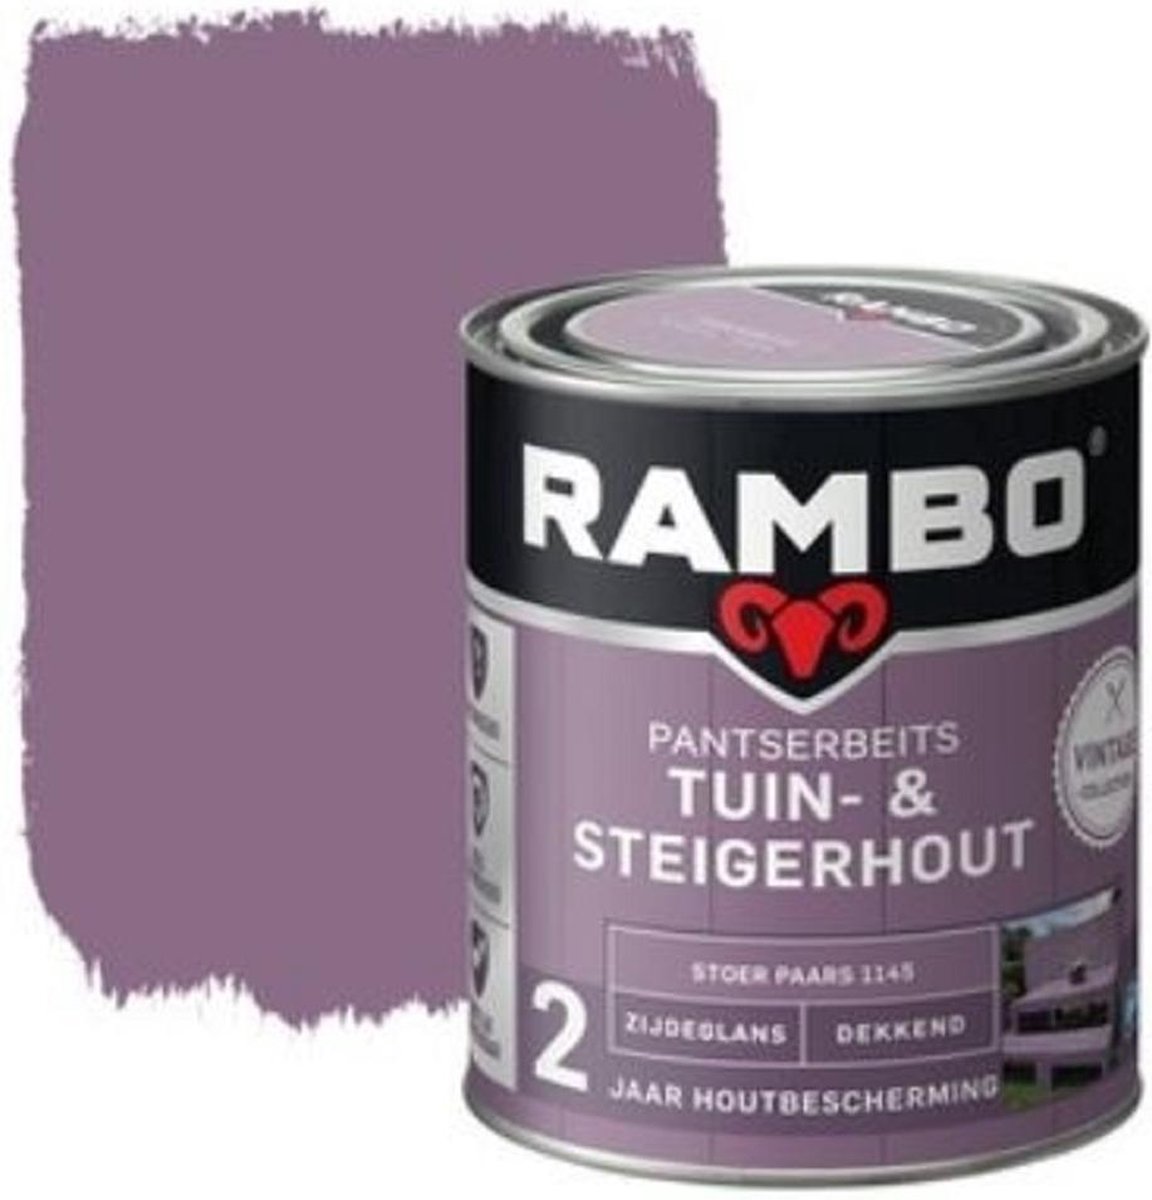 Rambo pantserbeits tuin- & steigerhout stoer paars 750 ml | bol.com